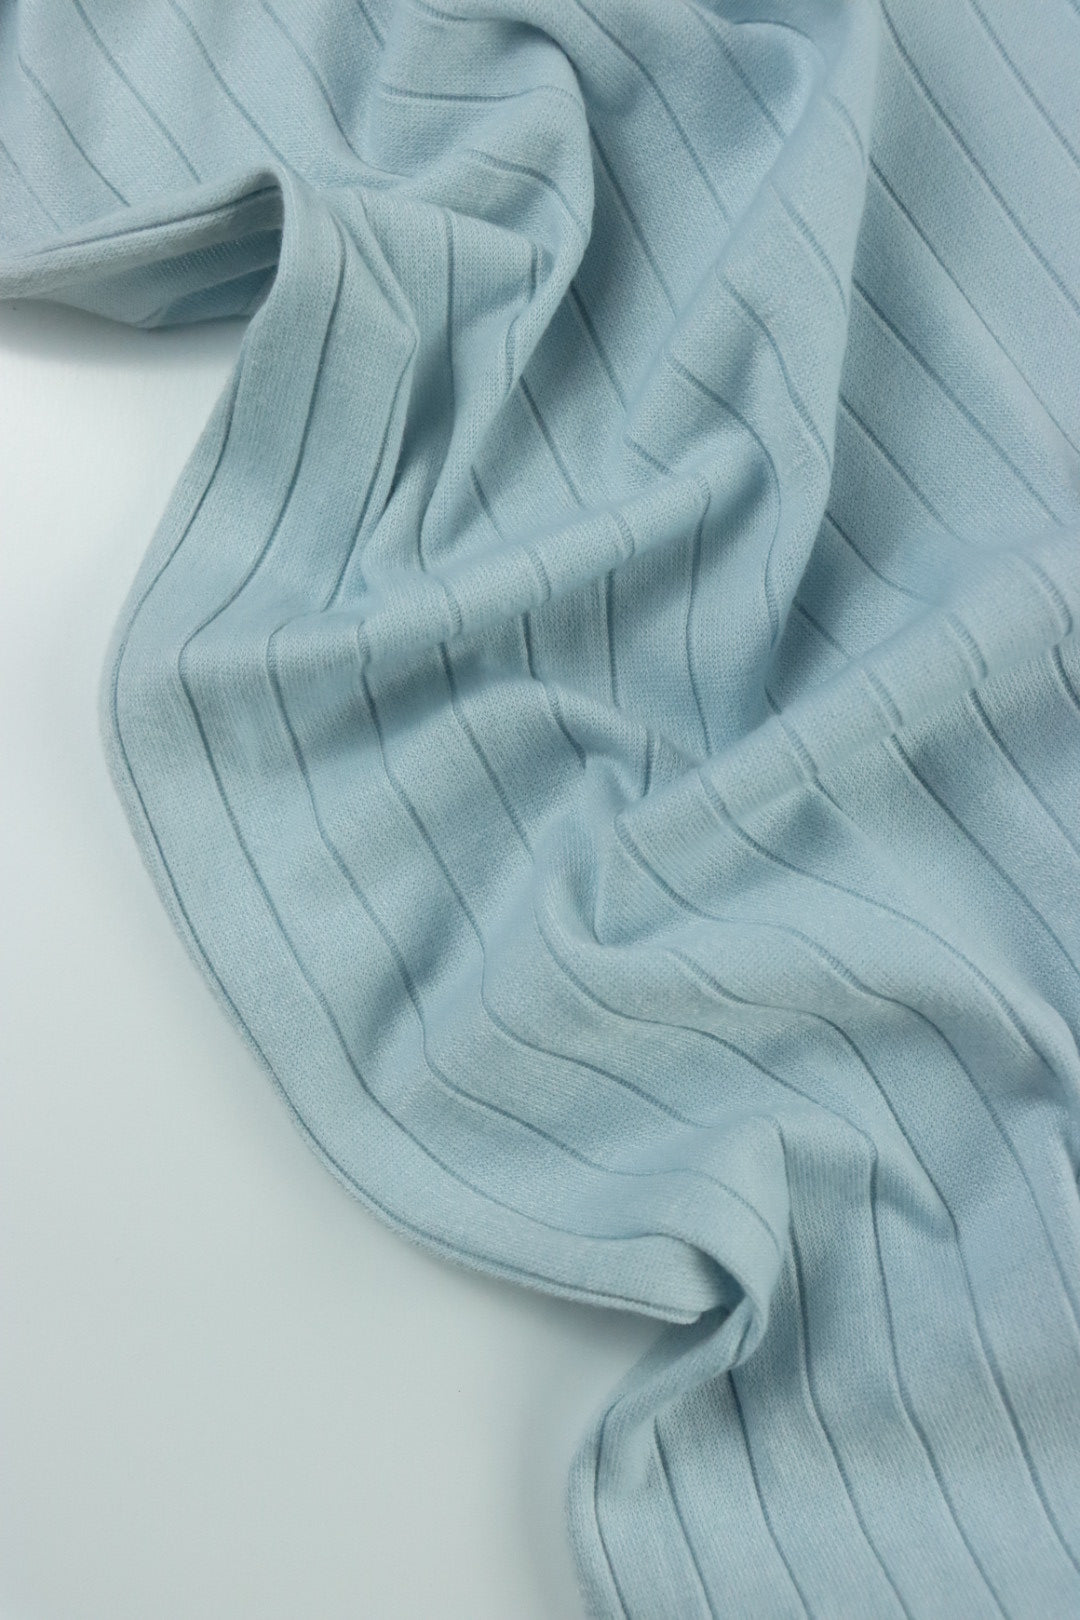 Sweater Knit | Surge Fabric Shop